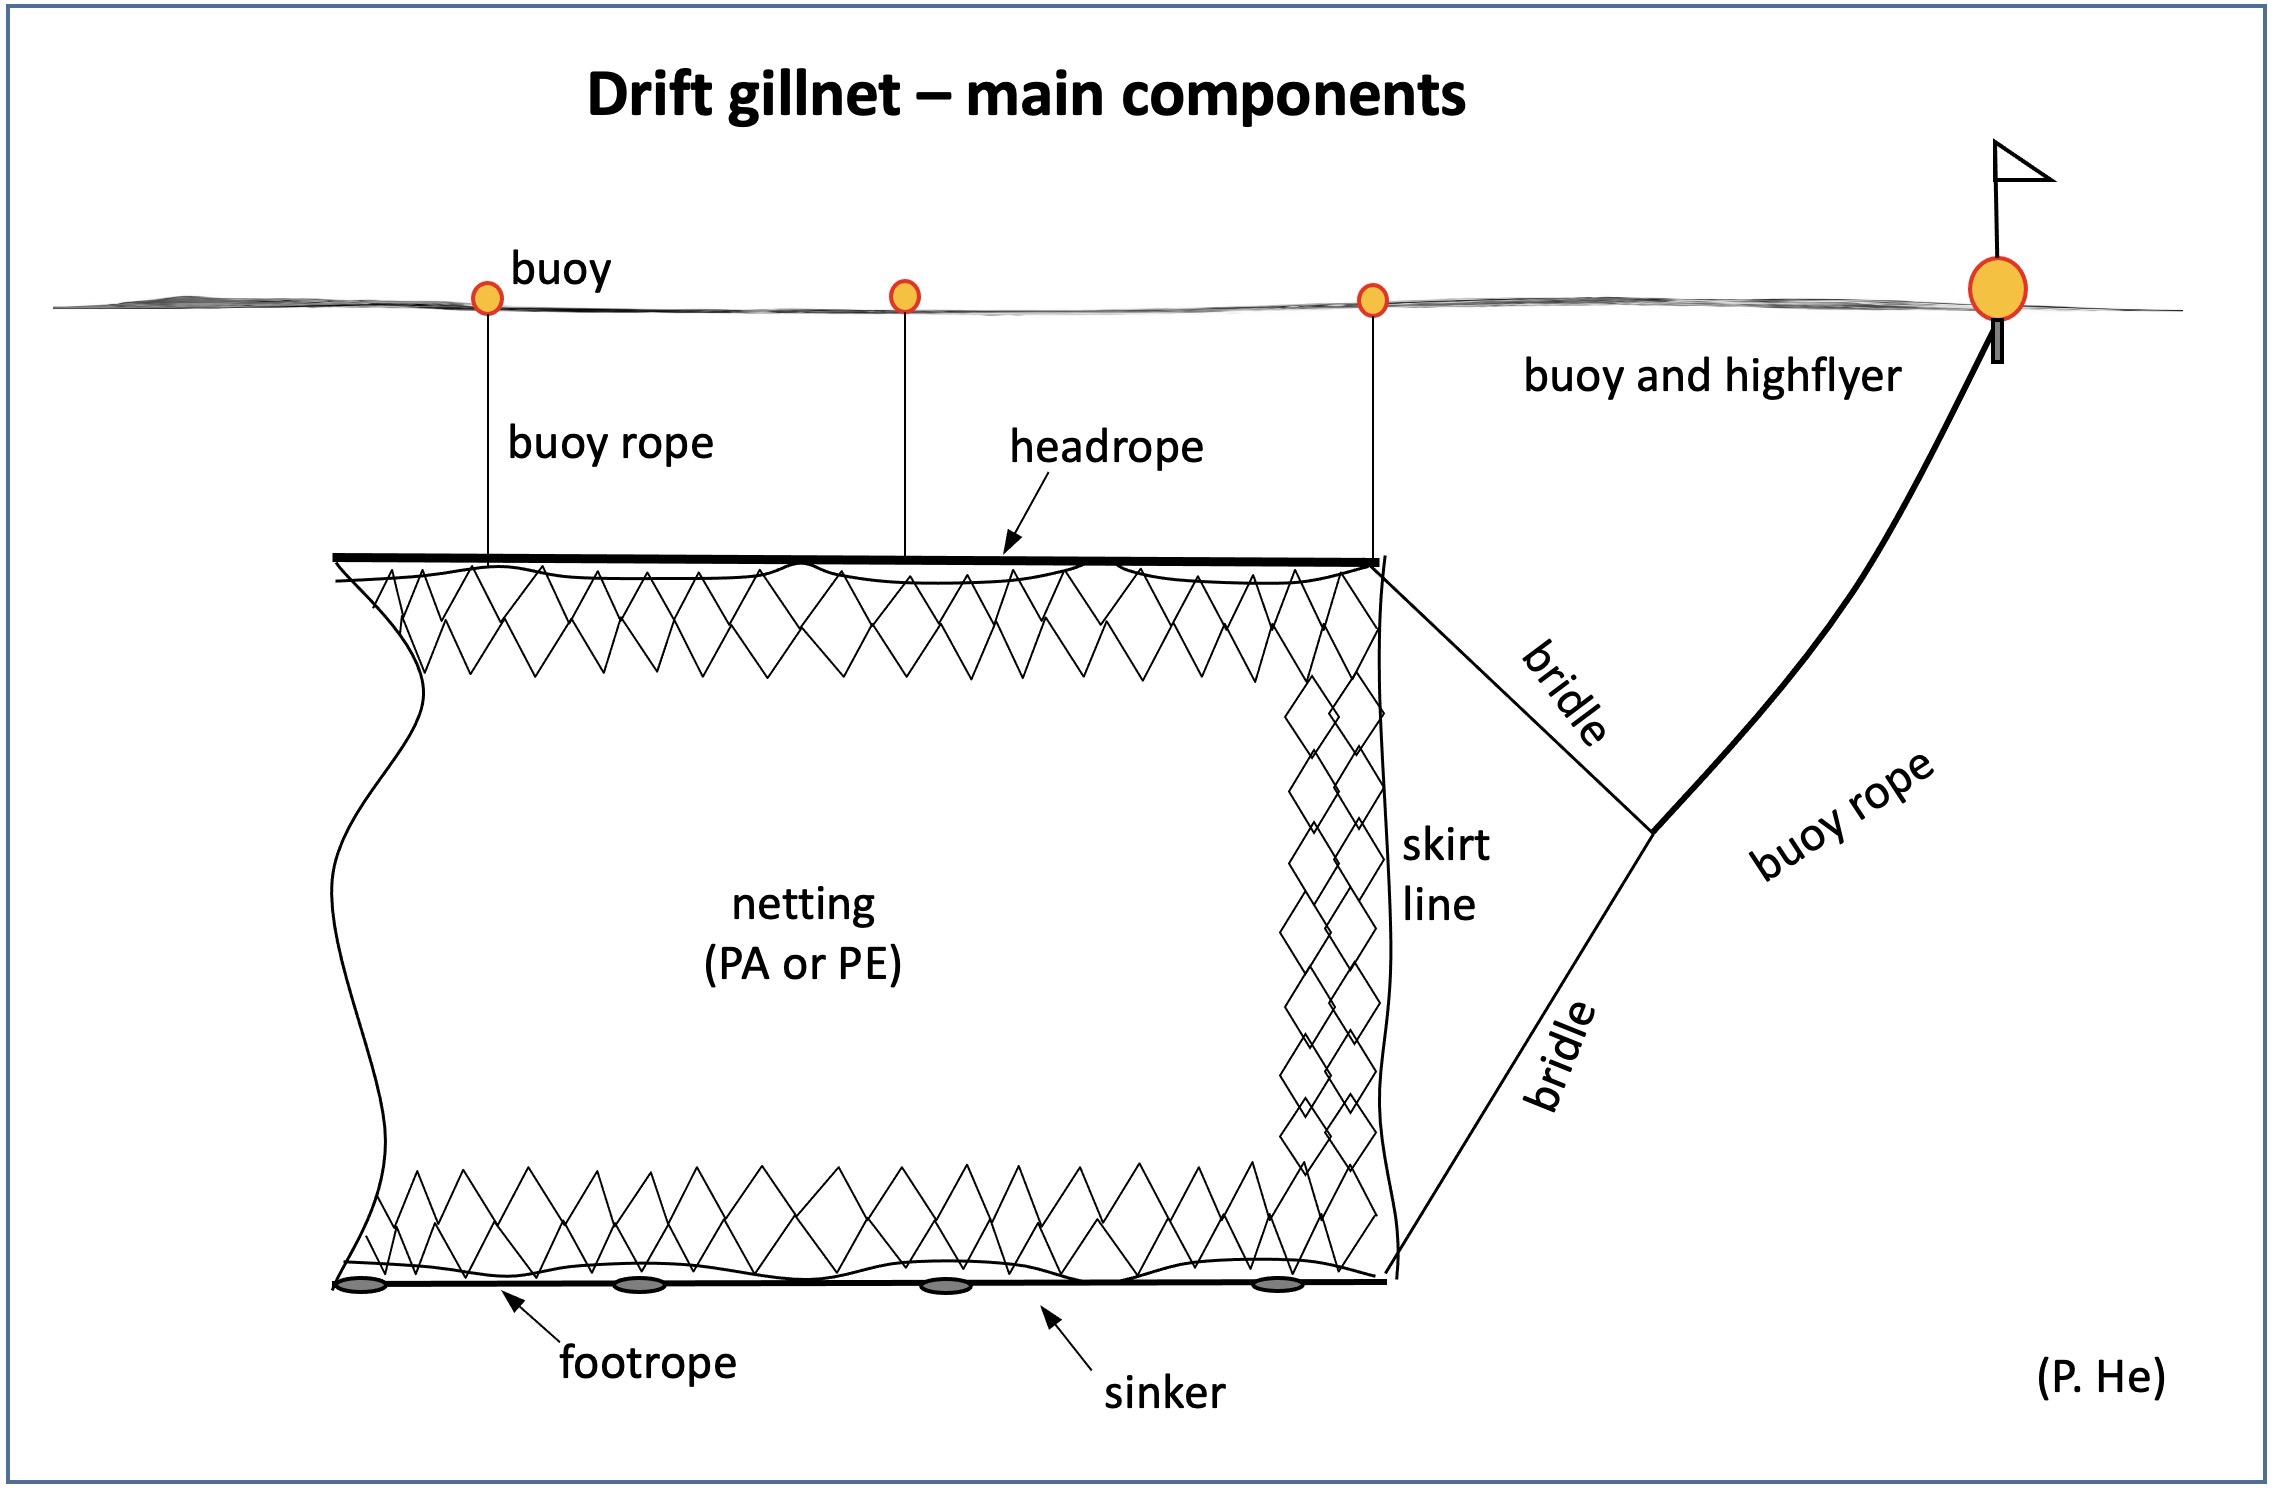 Drift gillnets - Fishing gear type